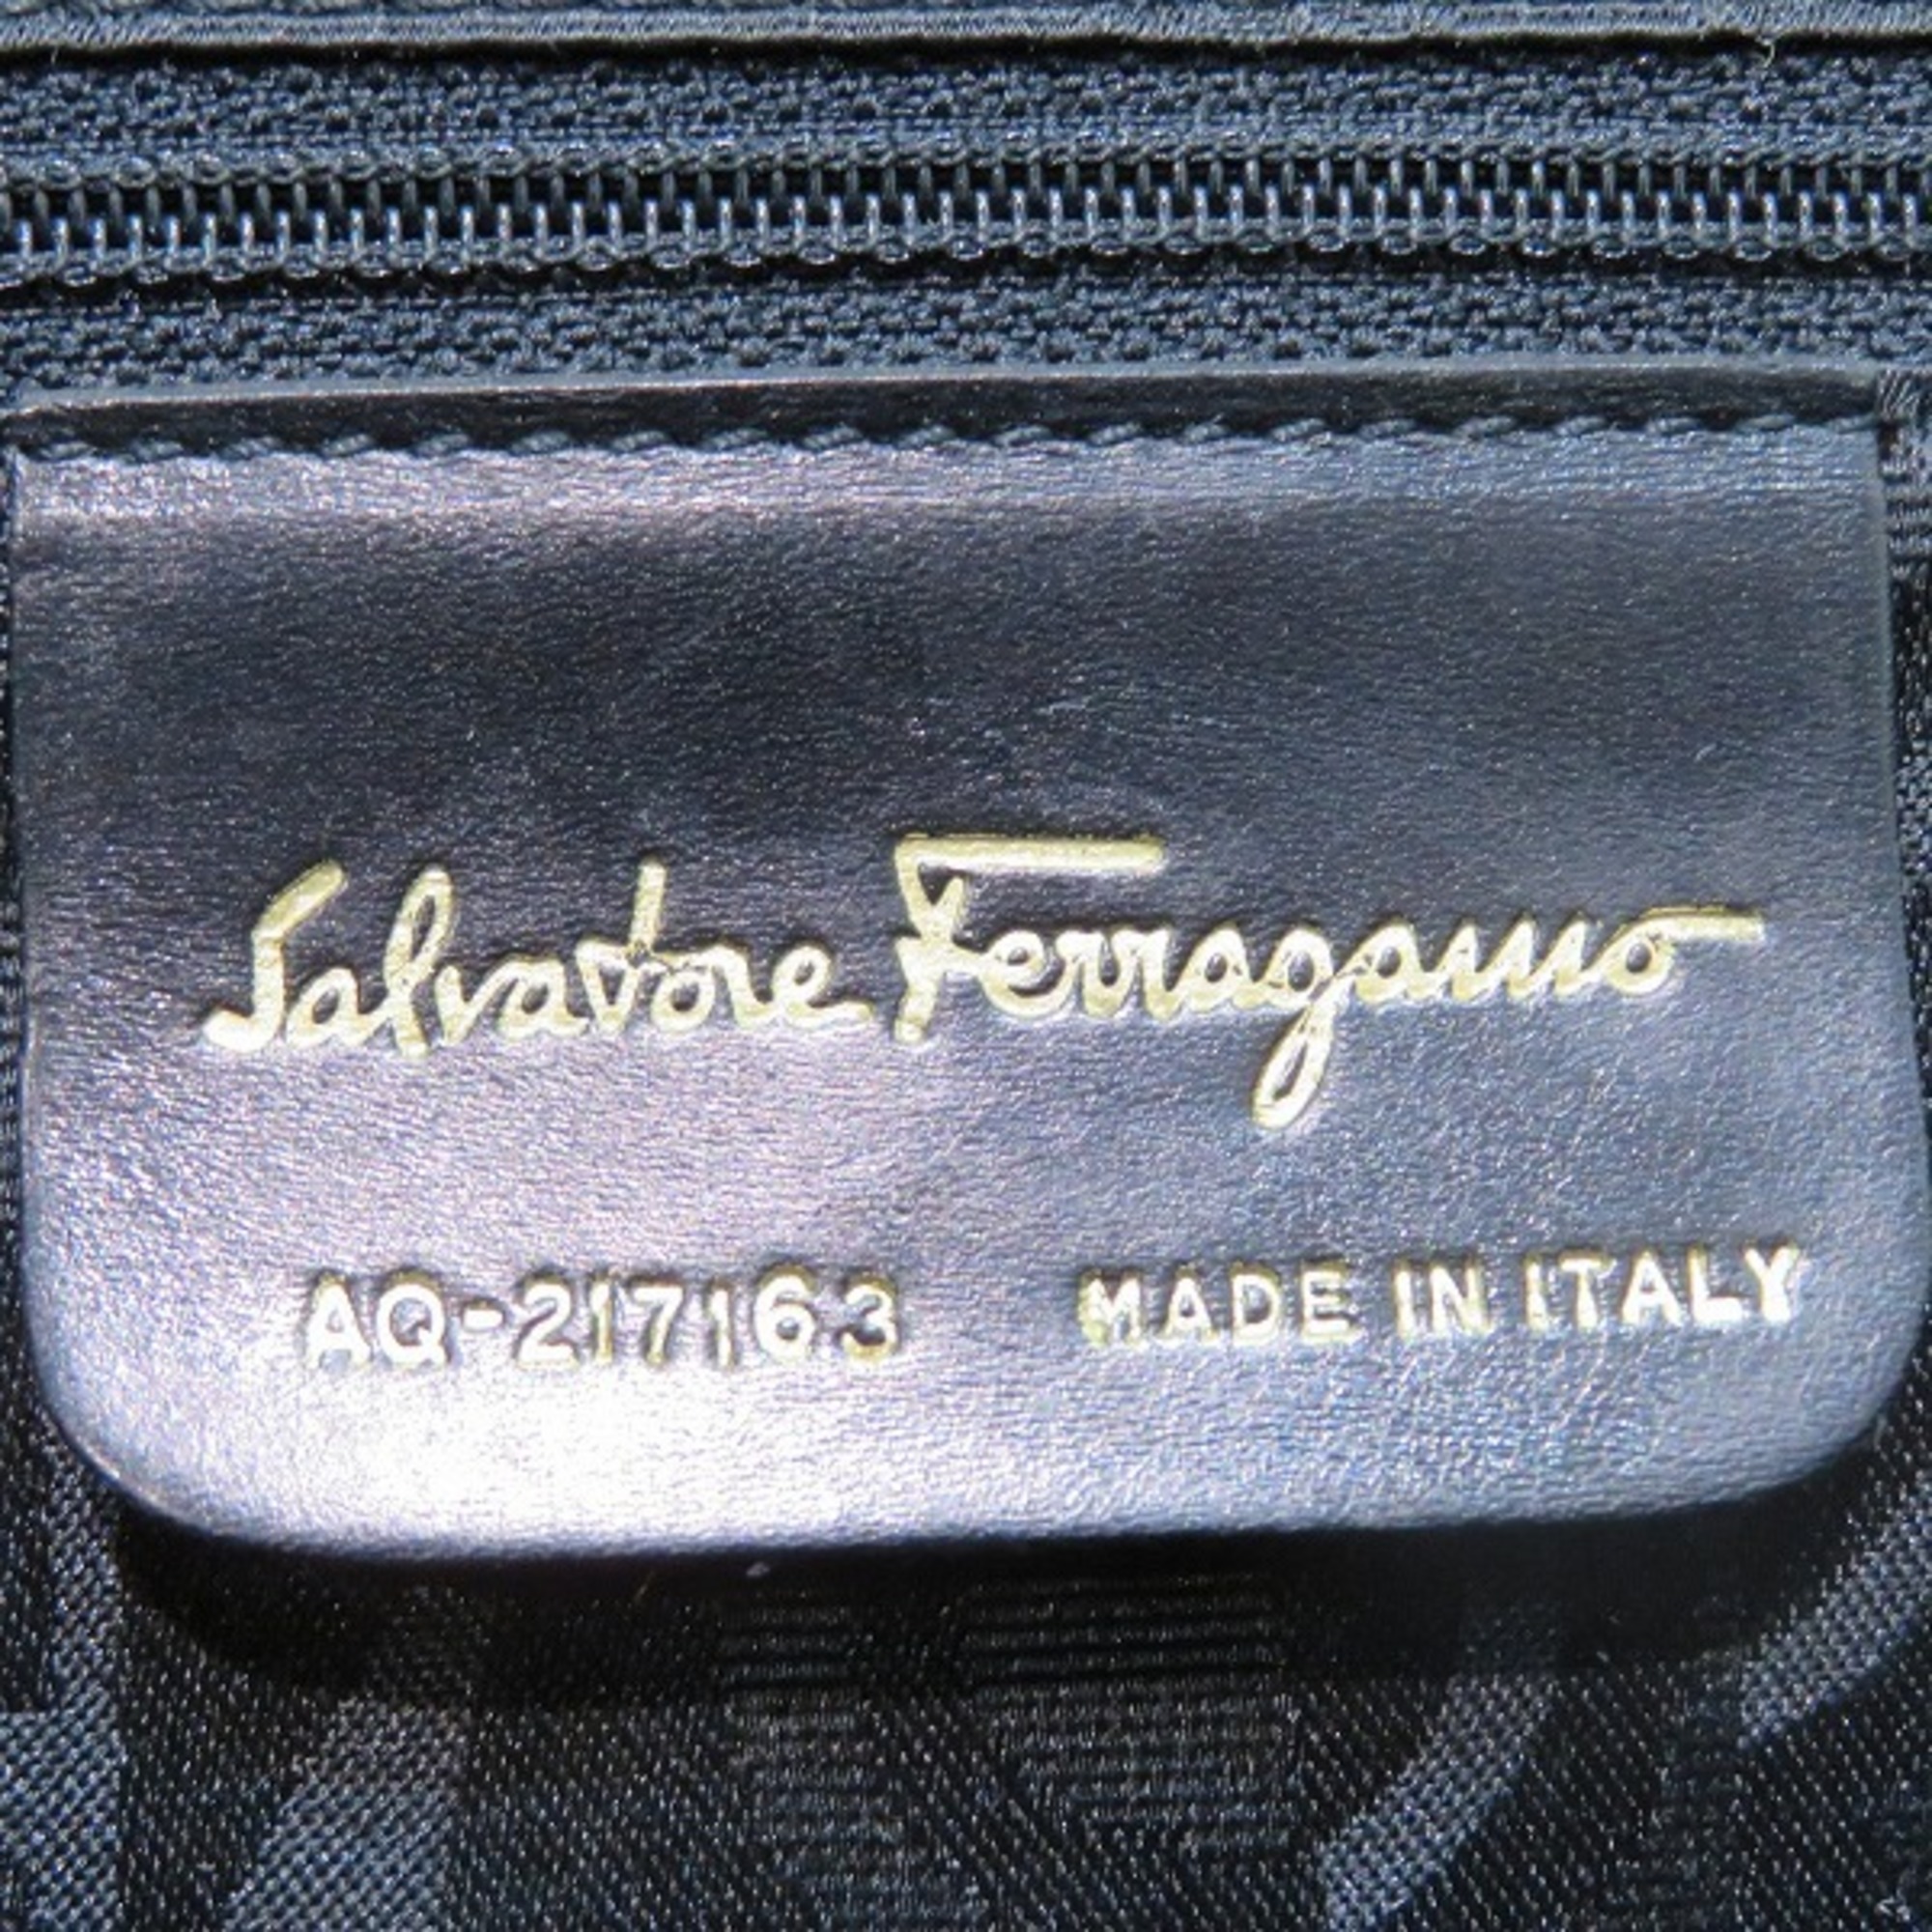 Salvatore Ferragamo Ferragamo Double Gancini AQ217621 Bag Handbag Shoulder Men Women